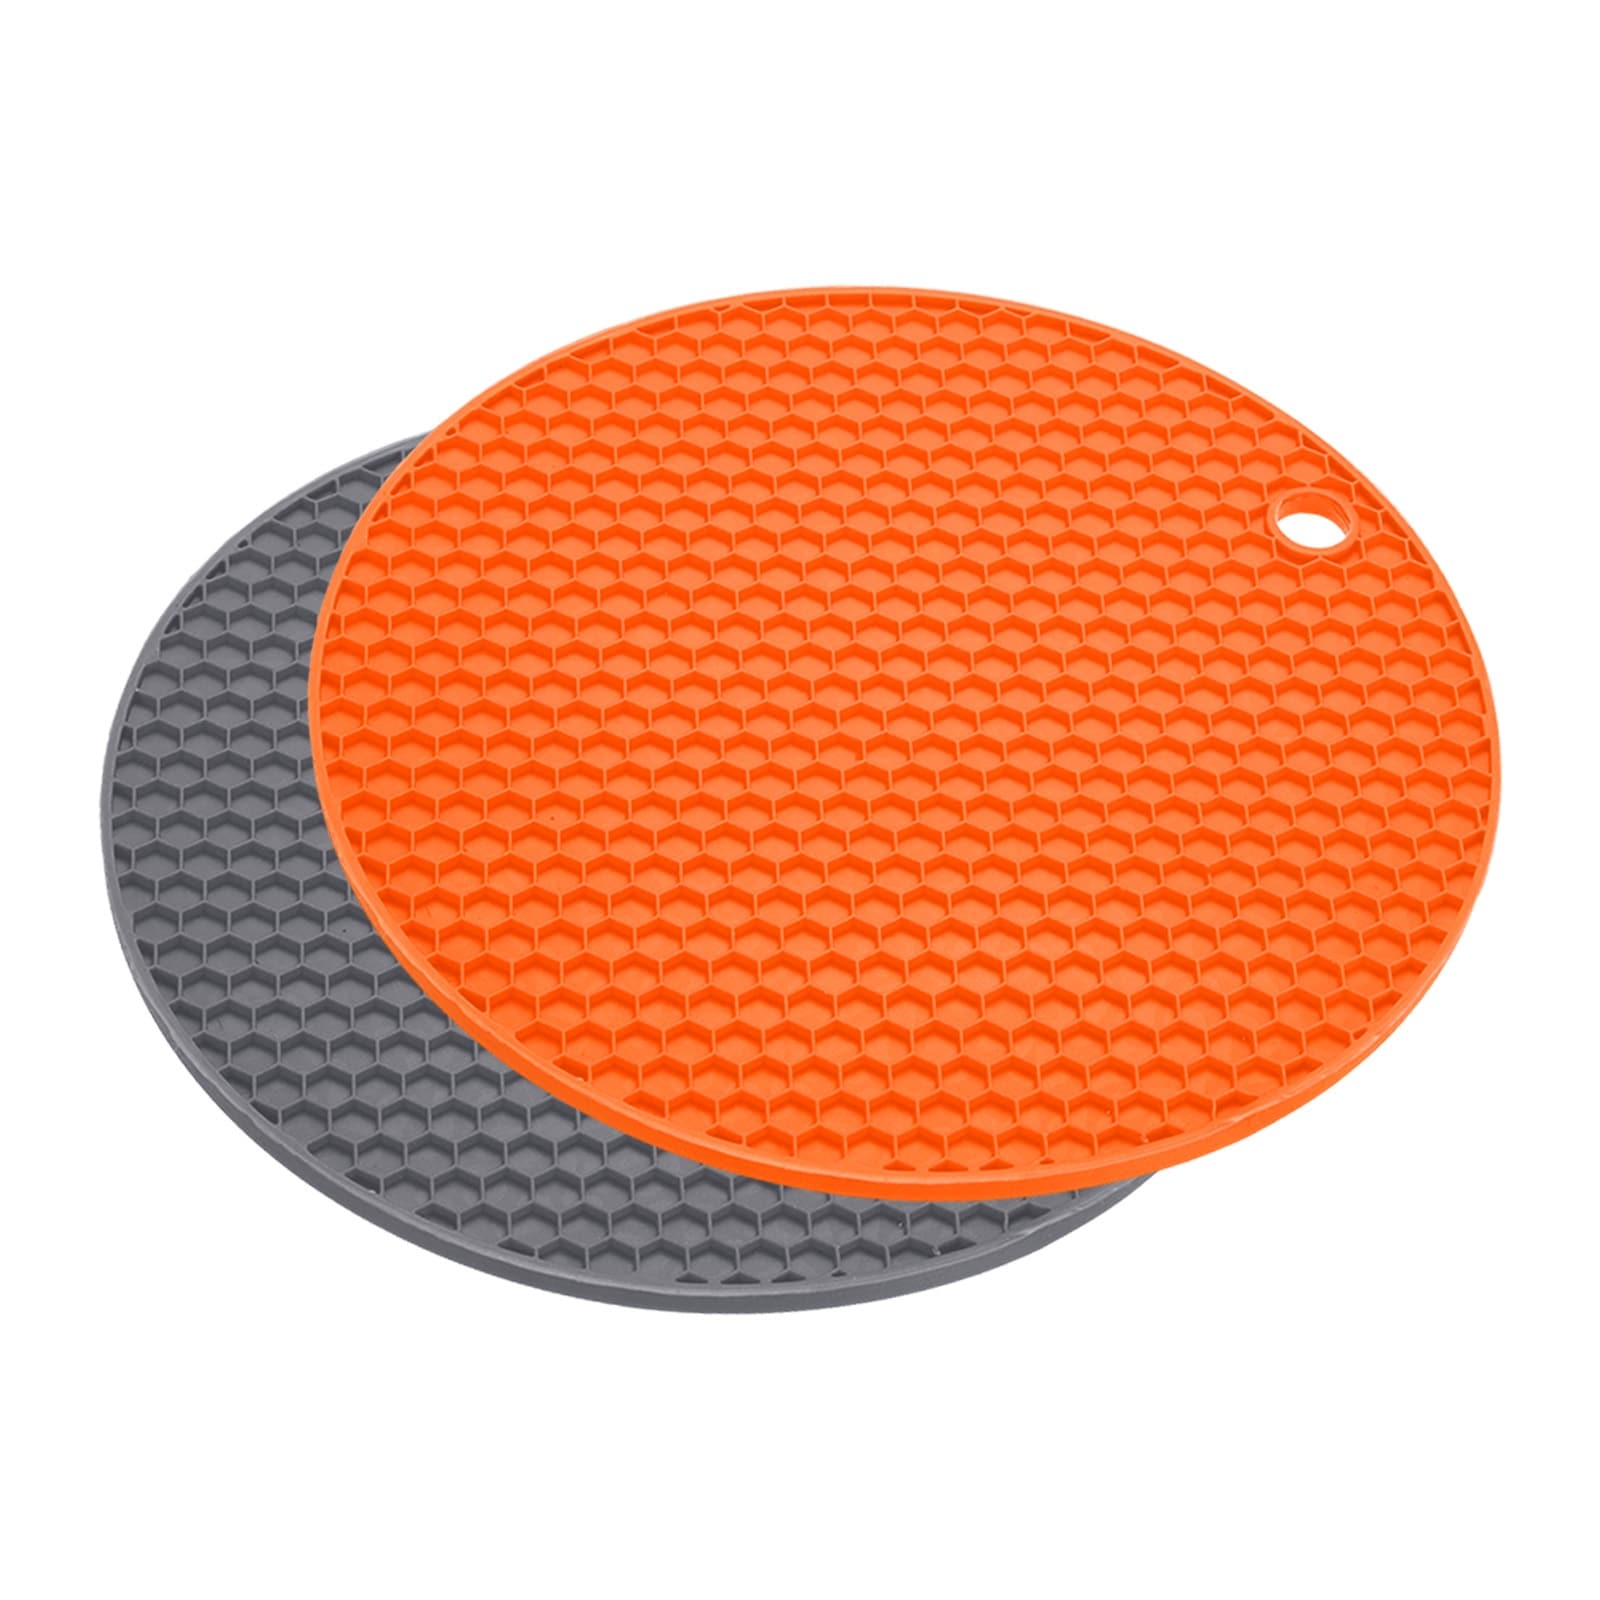 https://ak1.ostkcdn.com/images/products/is/images/direct/0e1ee70ee56069ce40a7a9e36945d2c1253da173/Silicone-Trivet-Mats-2pcs%2C-Round-Honeycomb-Drying-Mat---Orange%2C-Deep-Gray.jpg